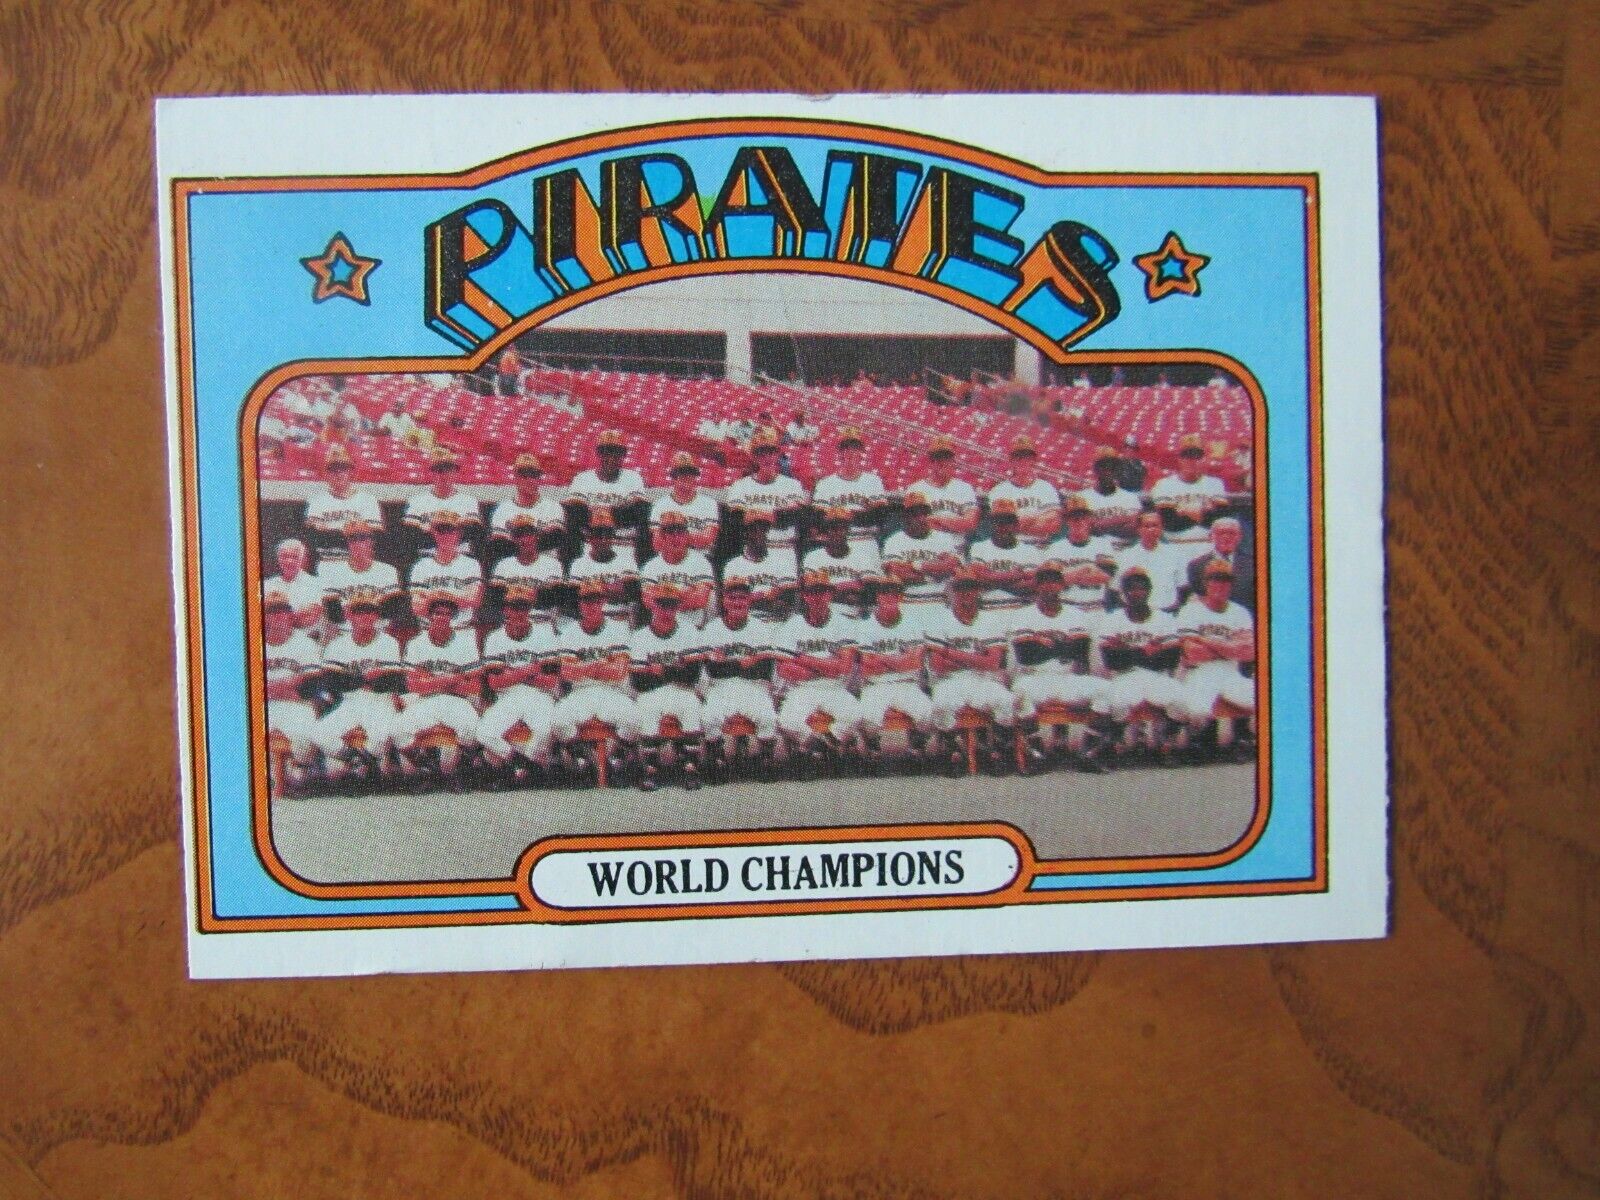 1972 Topps Baseball Cards - # 1 Pittsburgh Pirates - World Champions